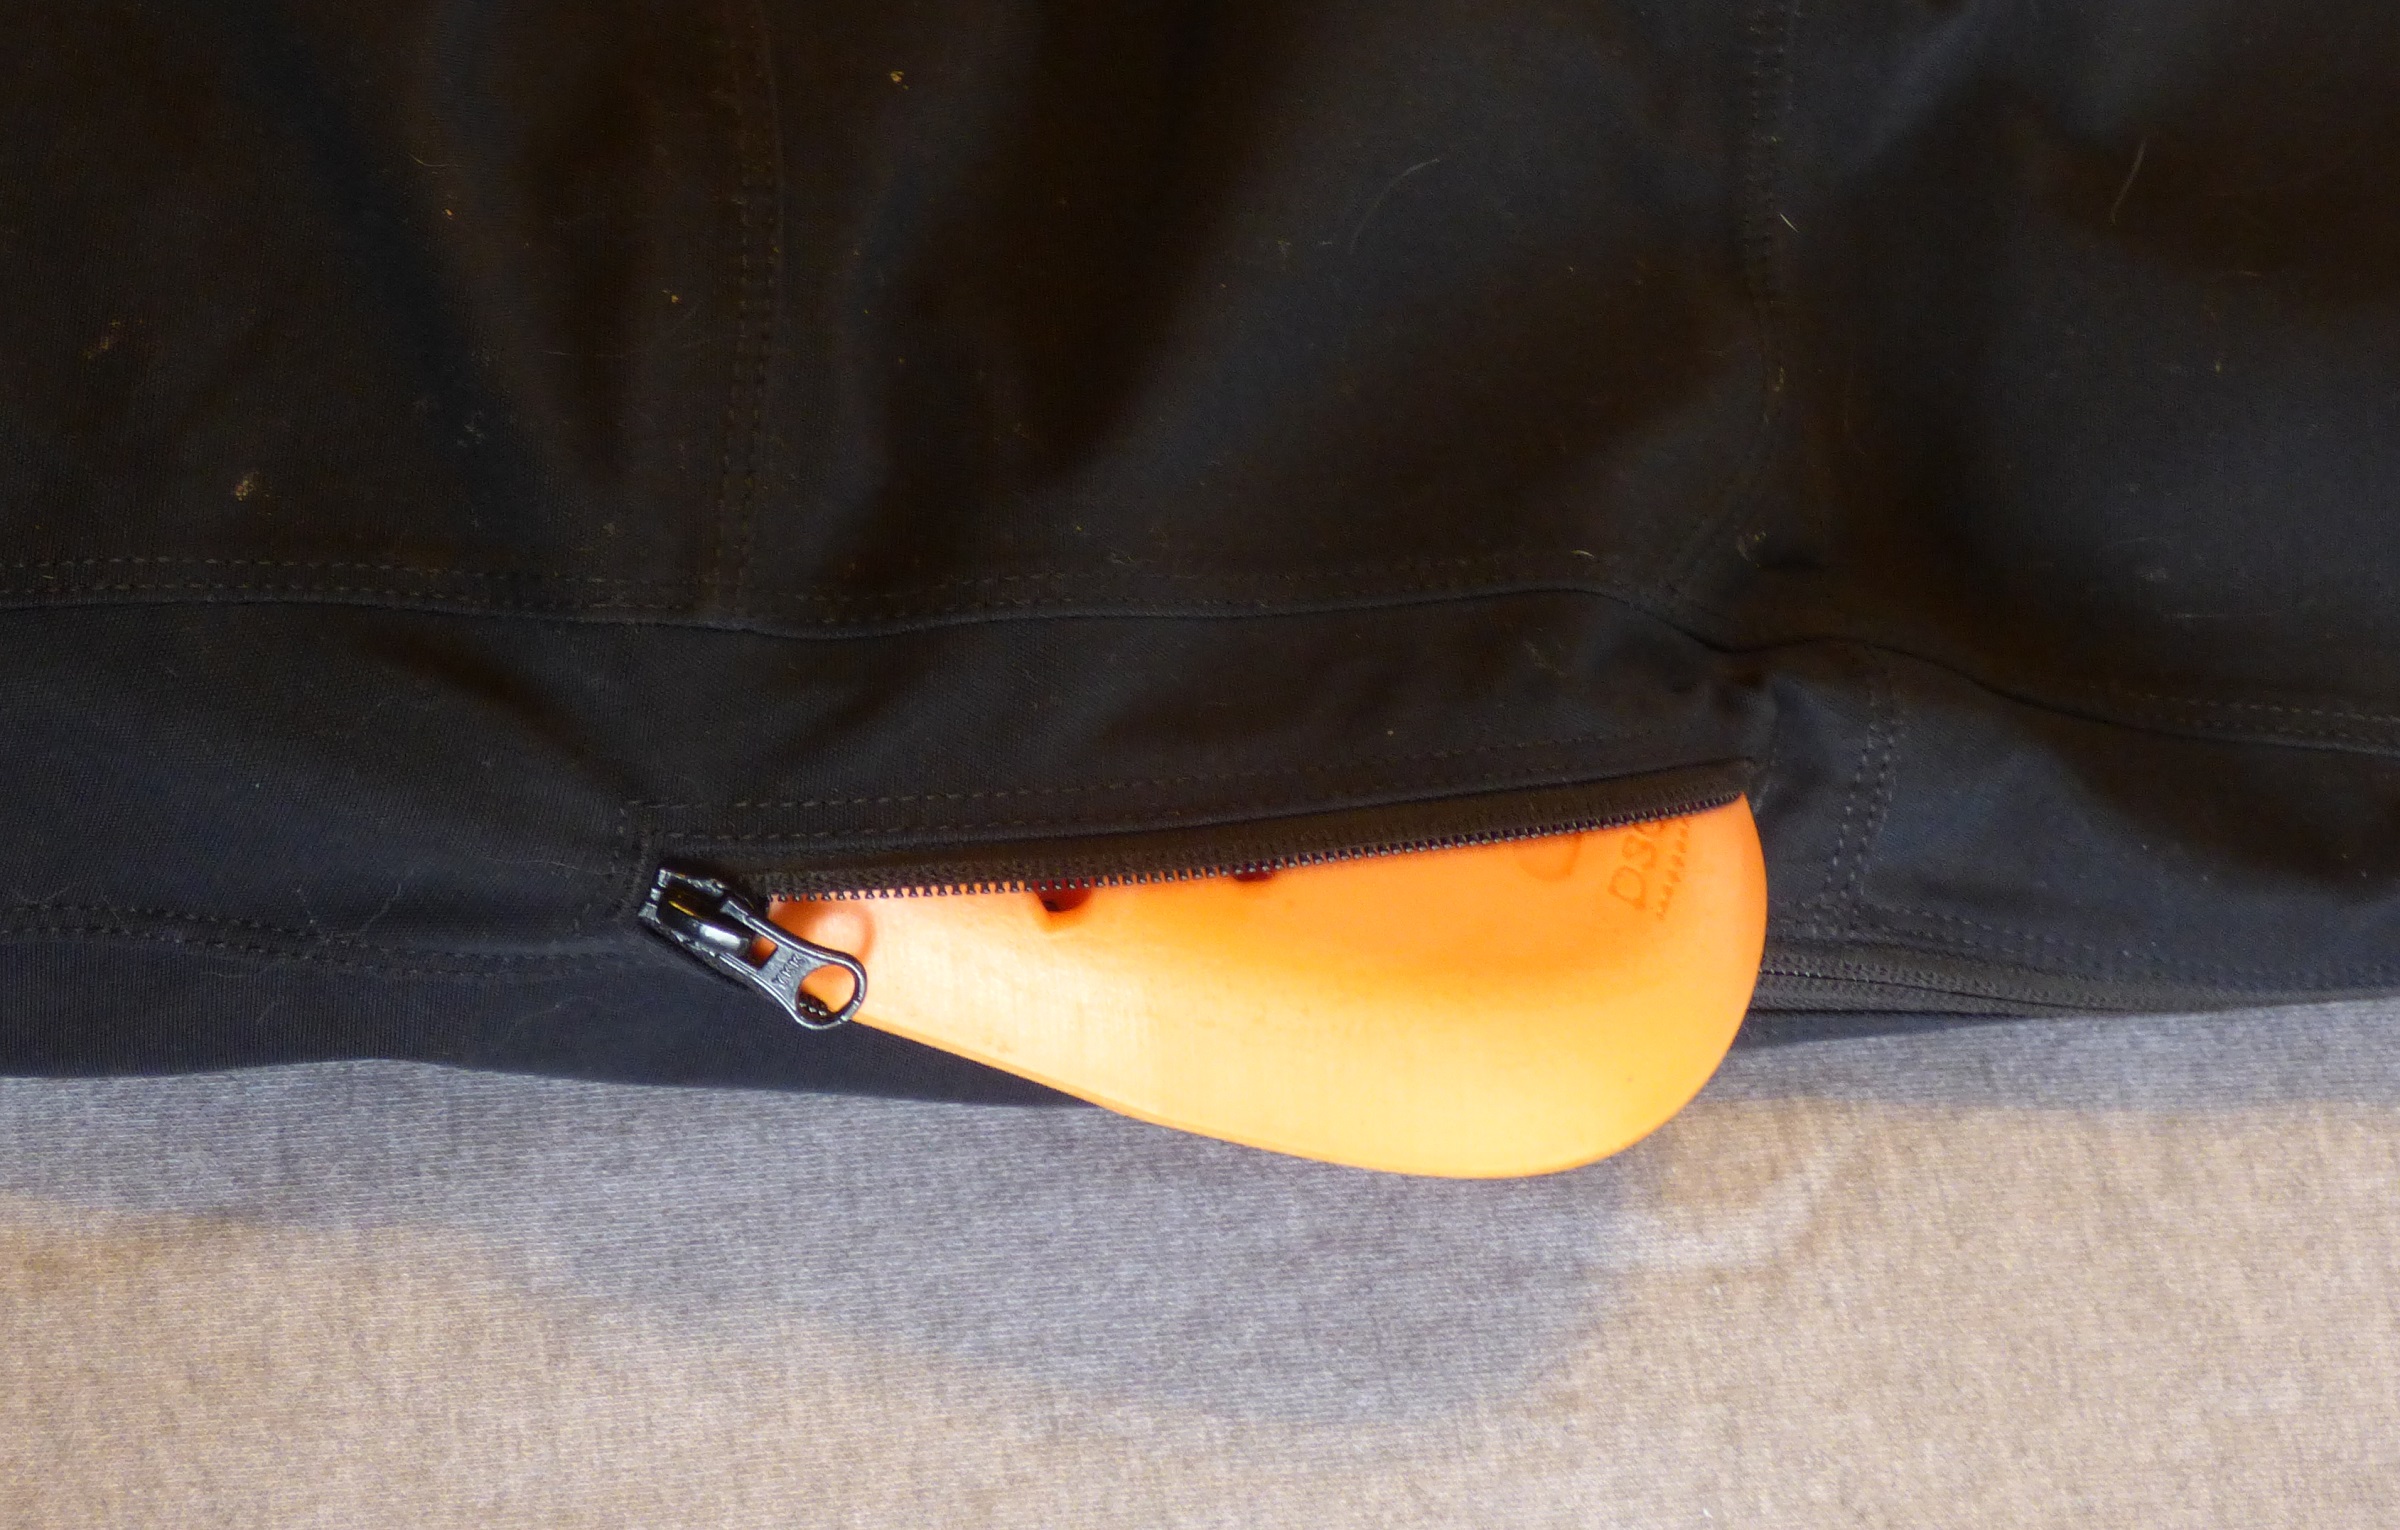 zipper access to knee armor